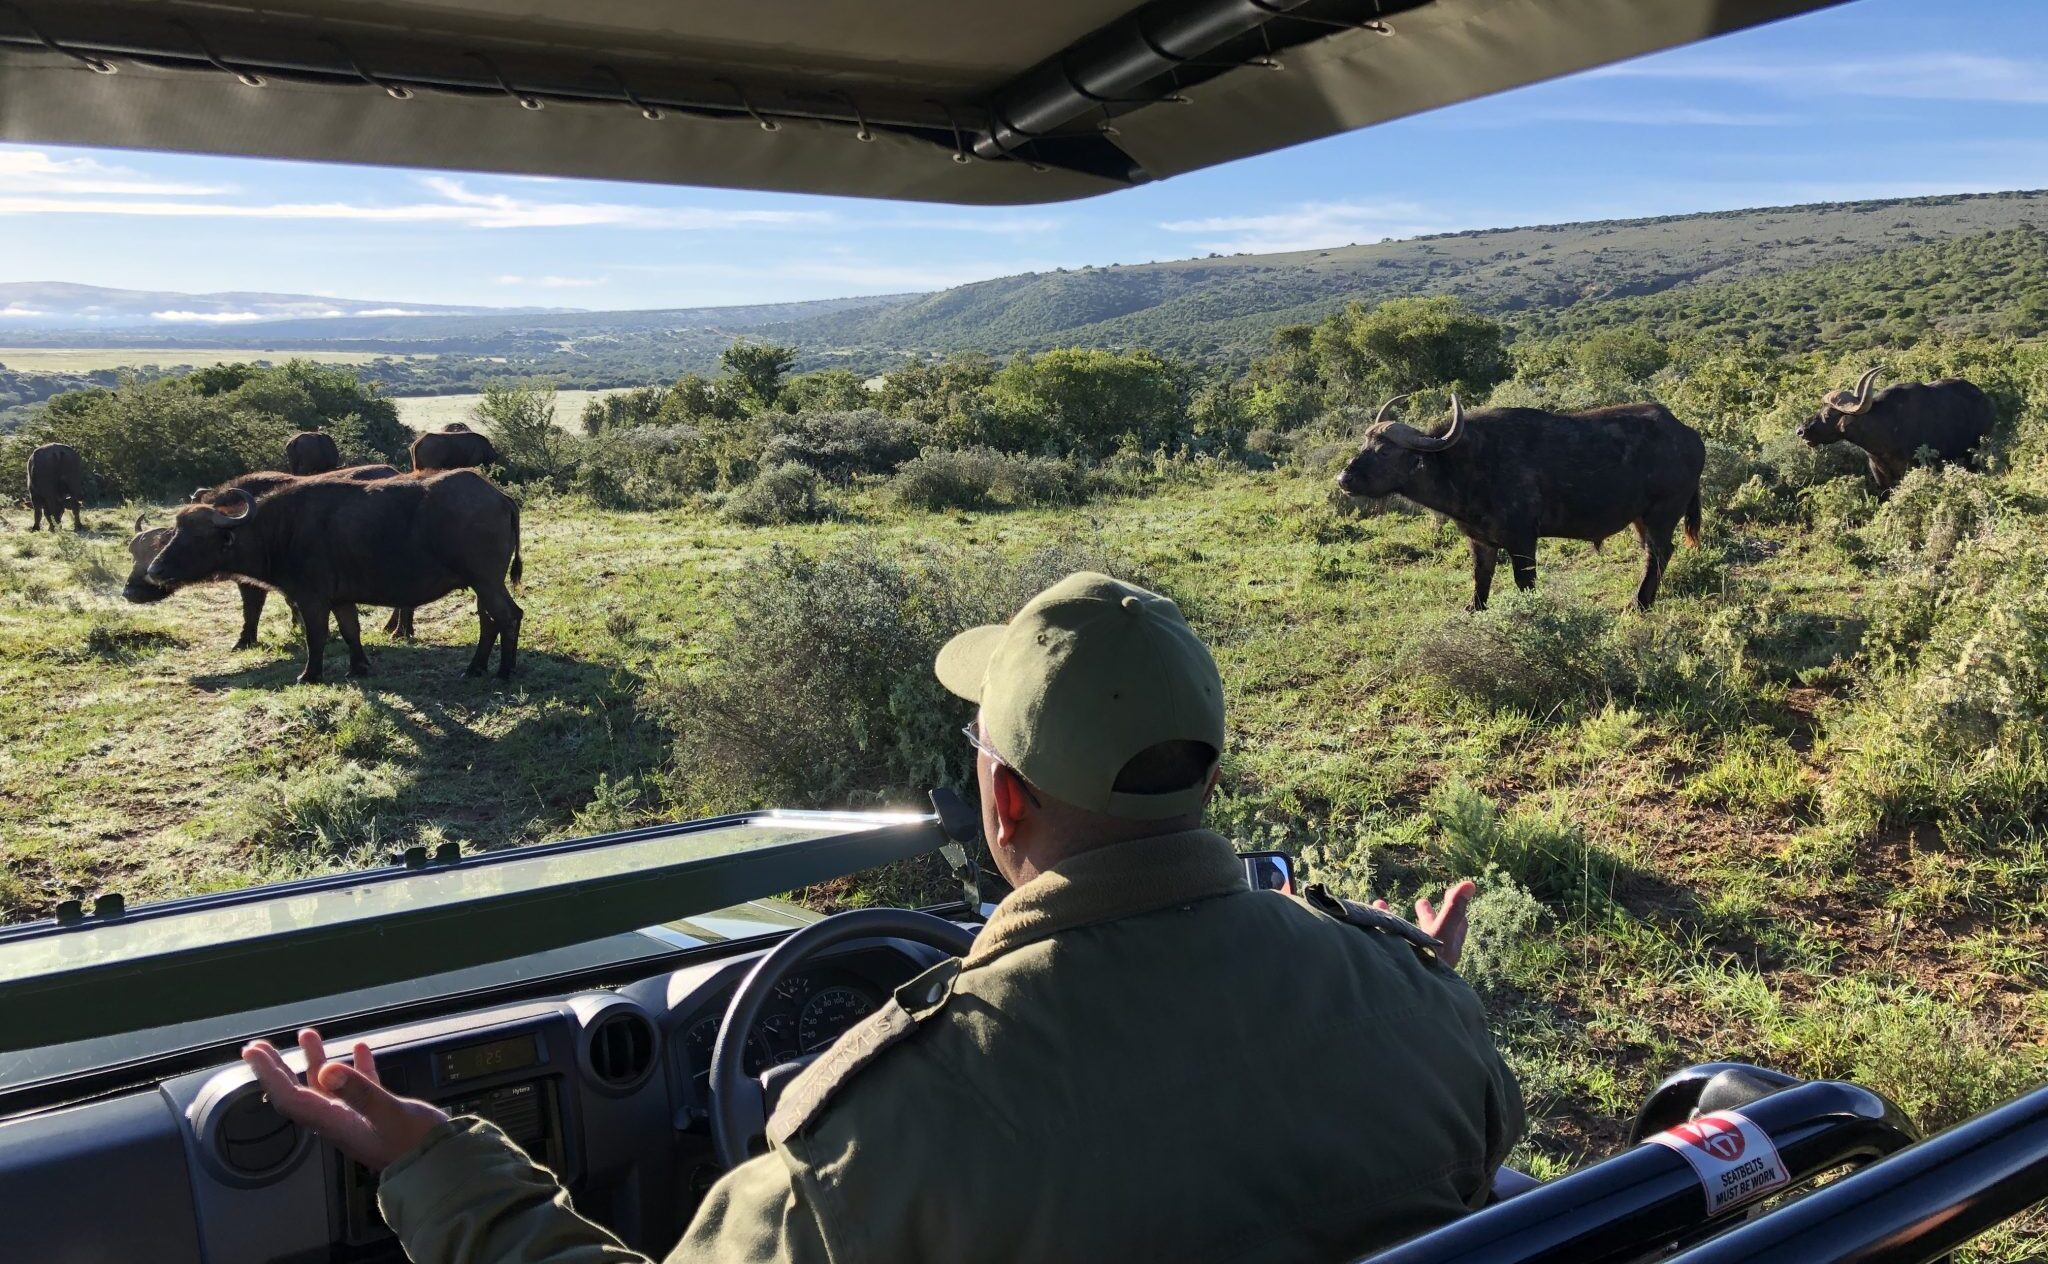 Experience the Big 5 on an African safari tour